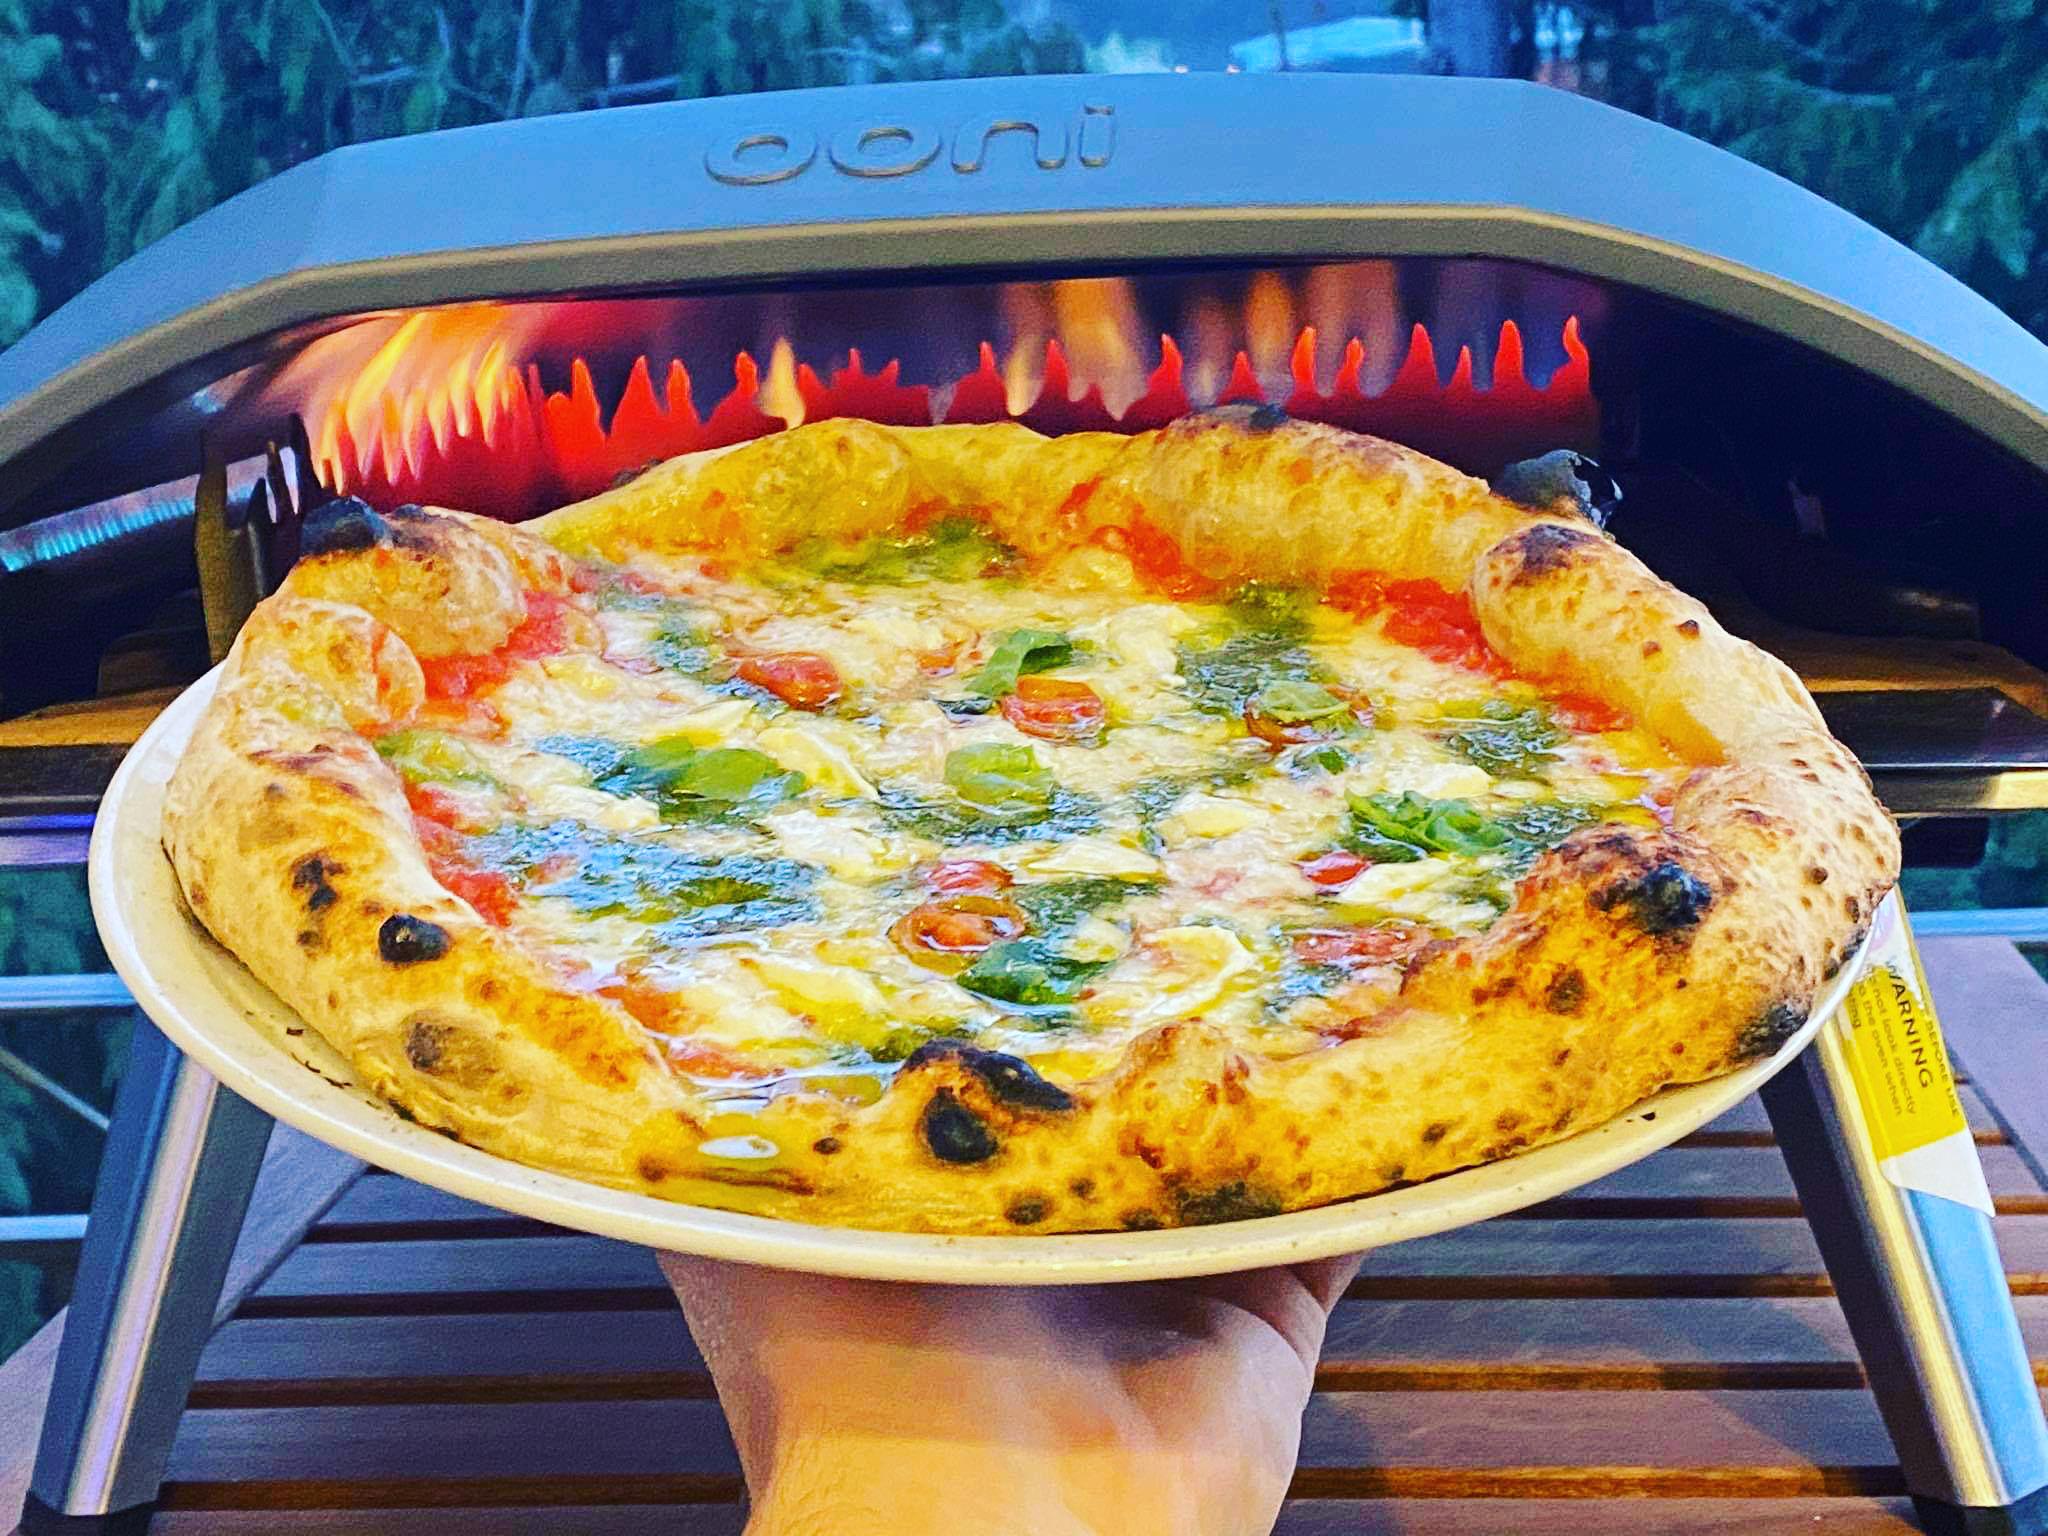 Palino tondo per pizza Ooni — Ooni IT